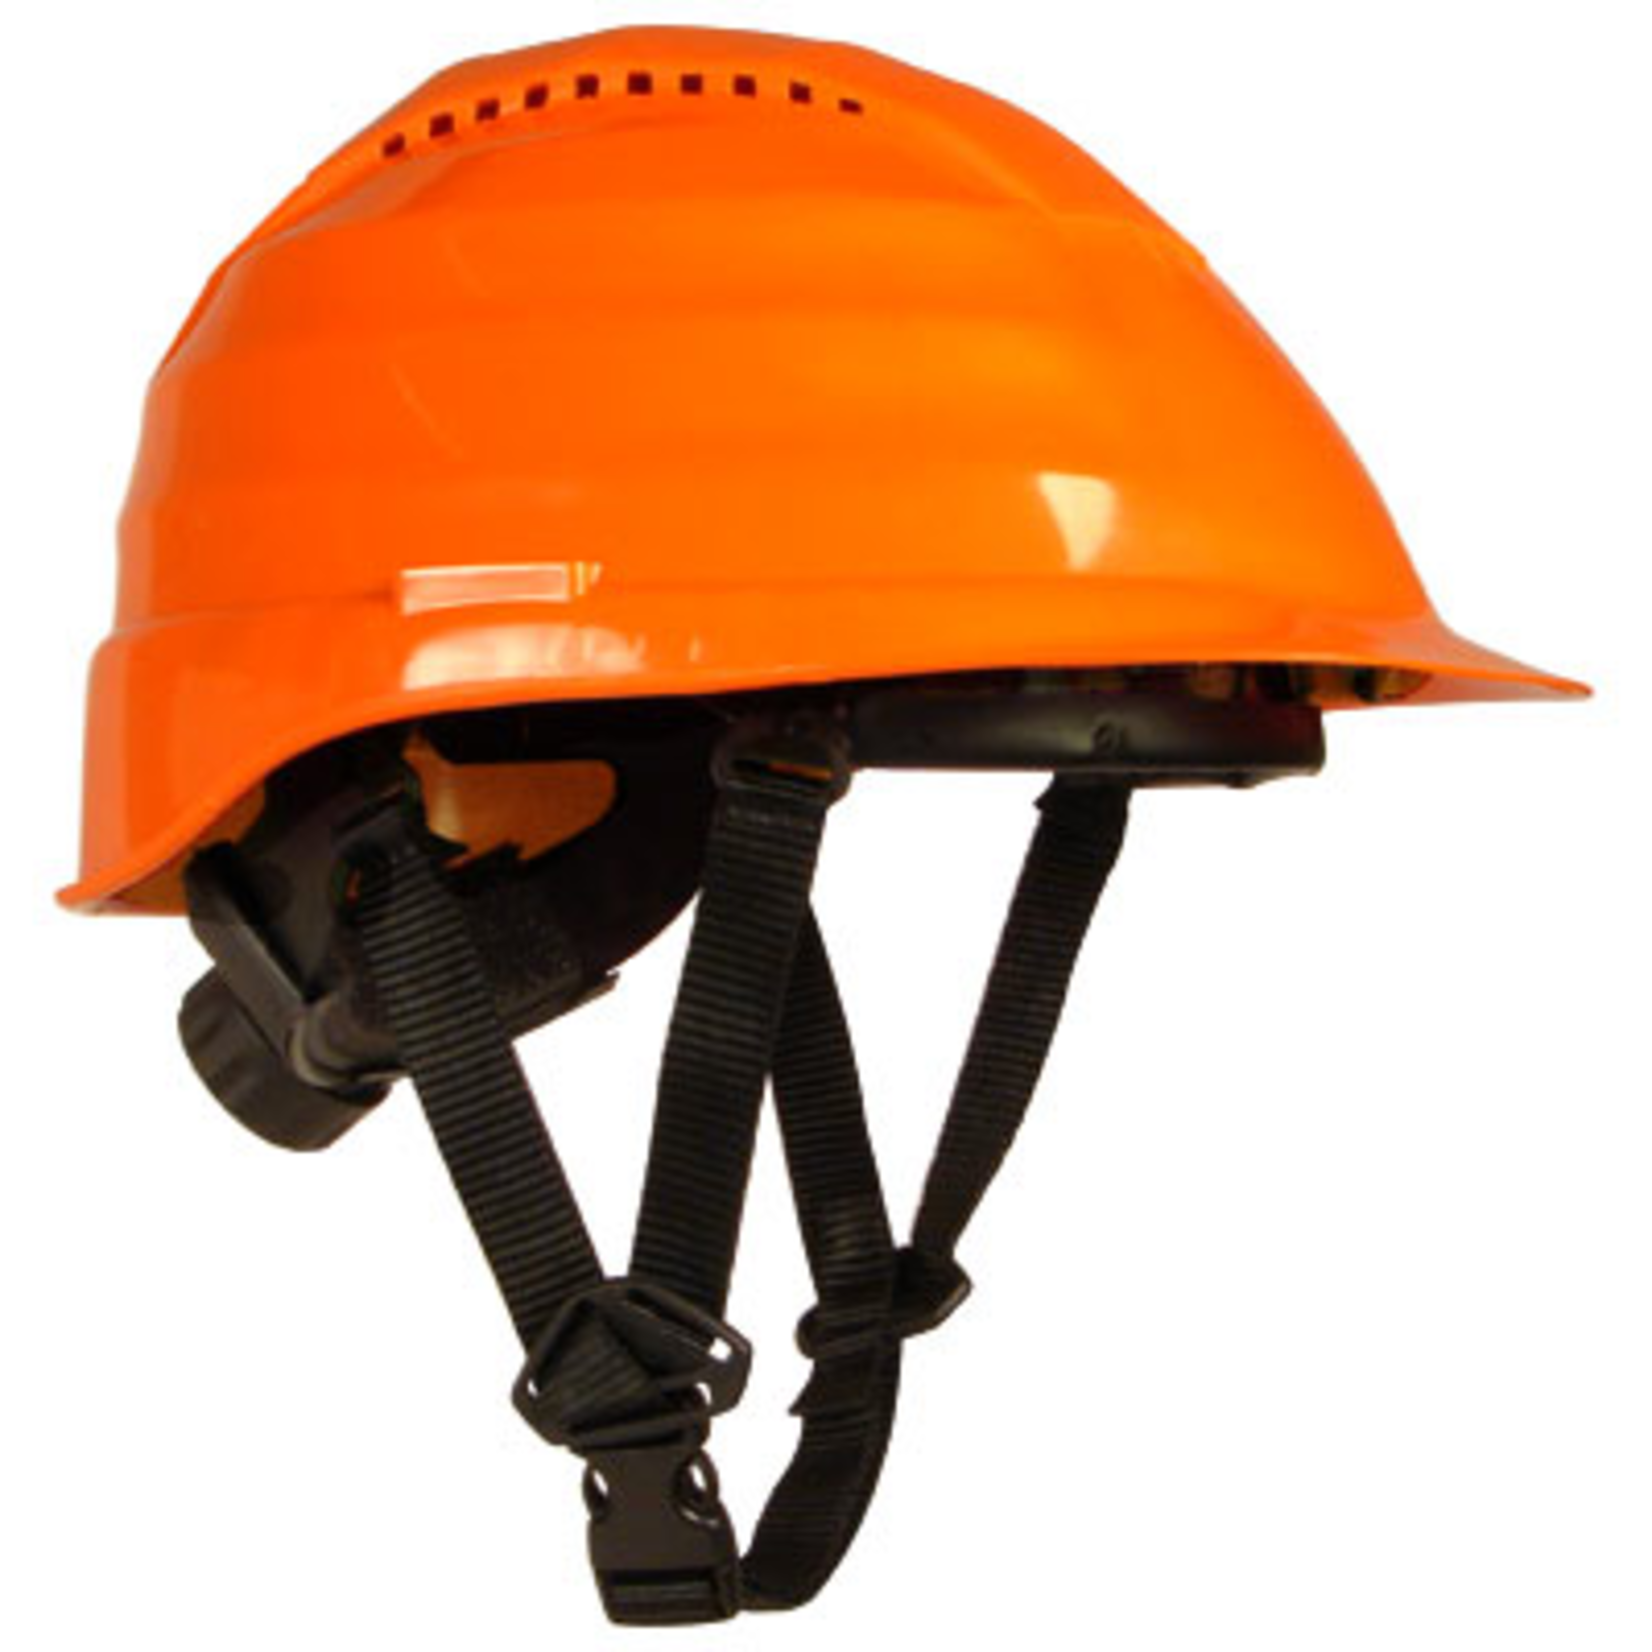 Rockman Rockman Forestry Arborist Vented Helmet, Orange with 4 Point Chinstrap